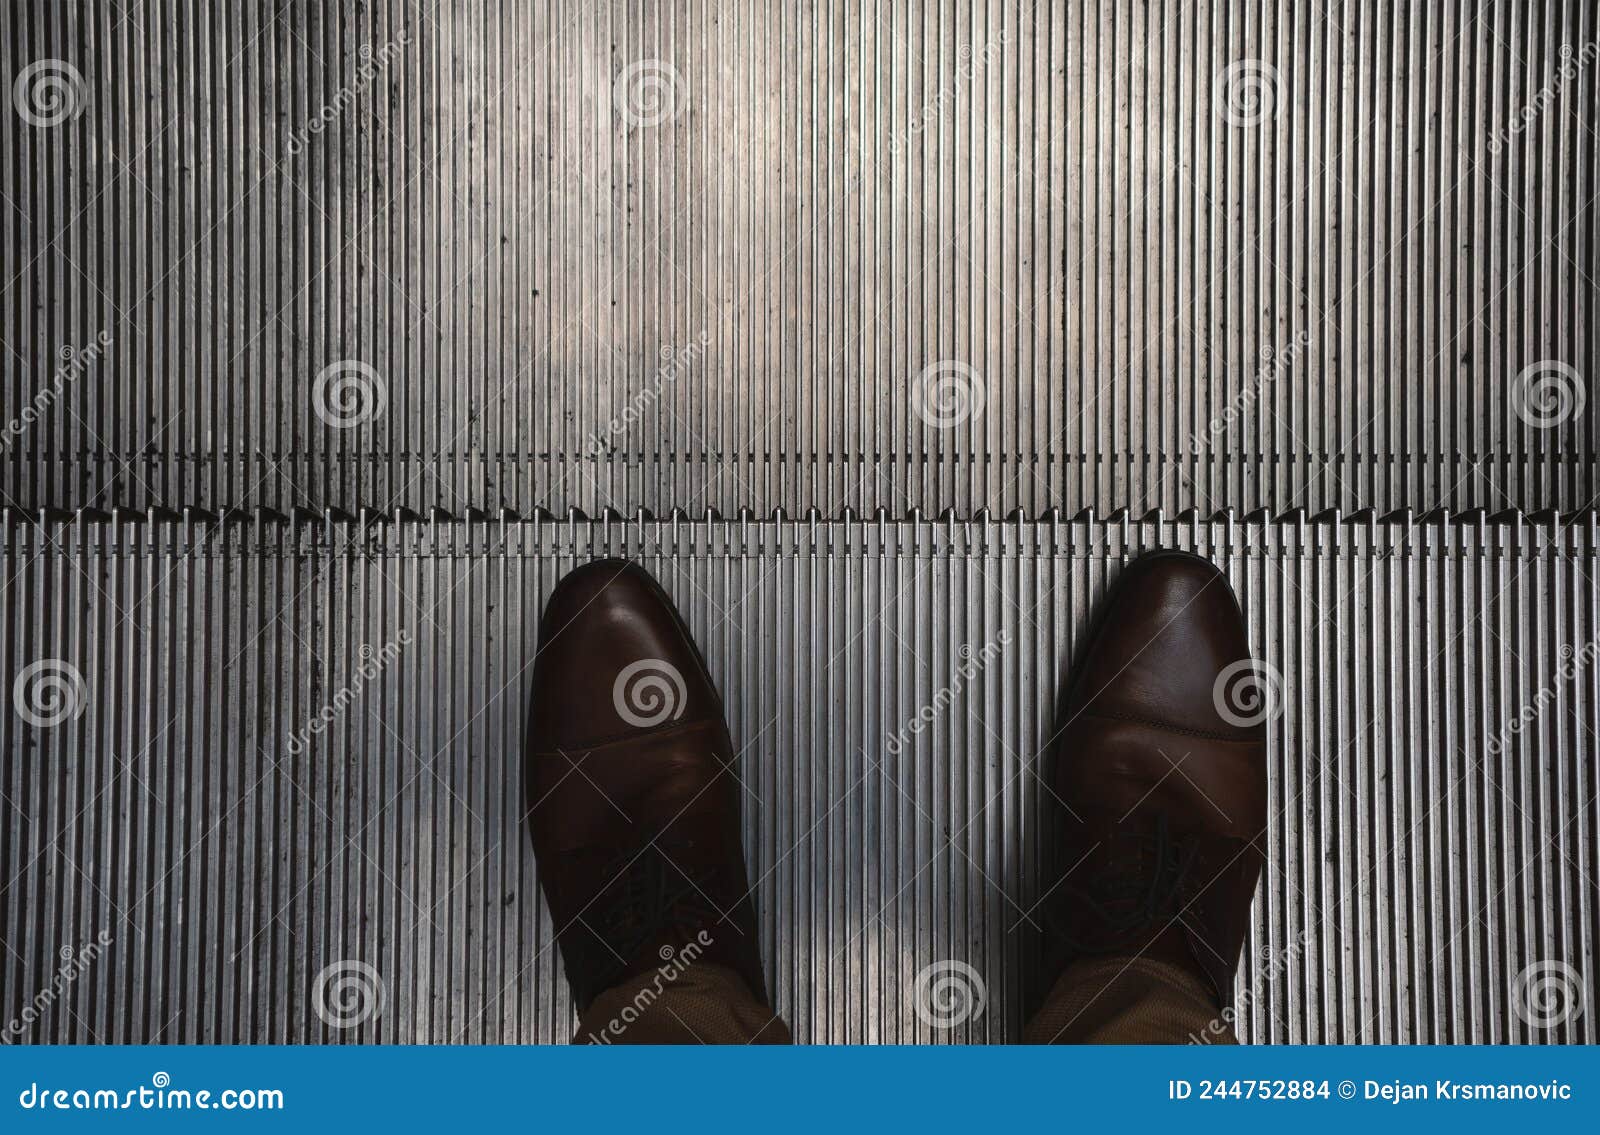 A man on the escalator stock photo. Image of shoelace - 244752884